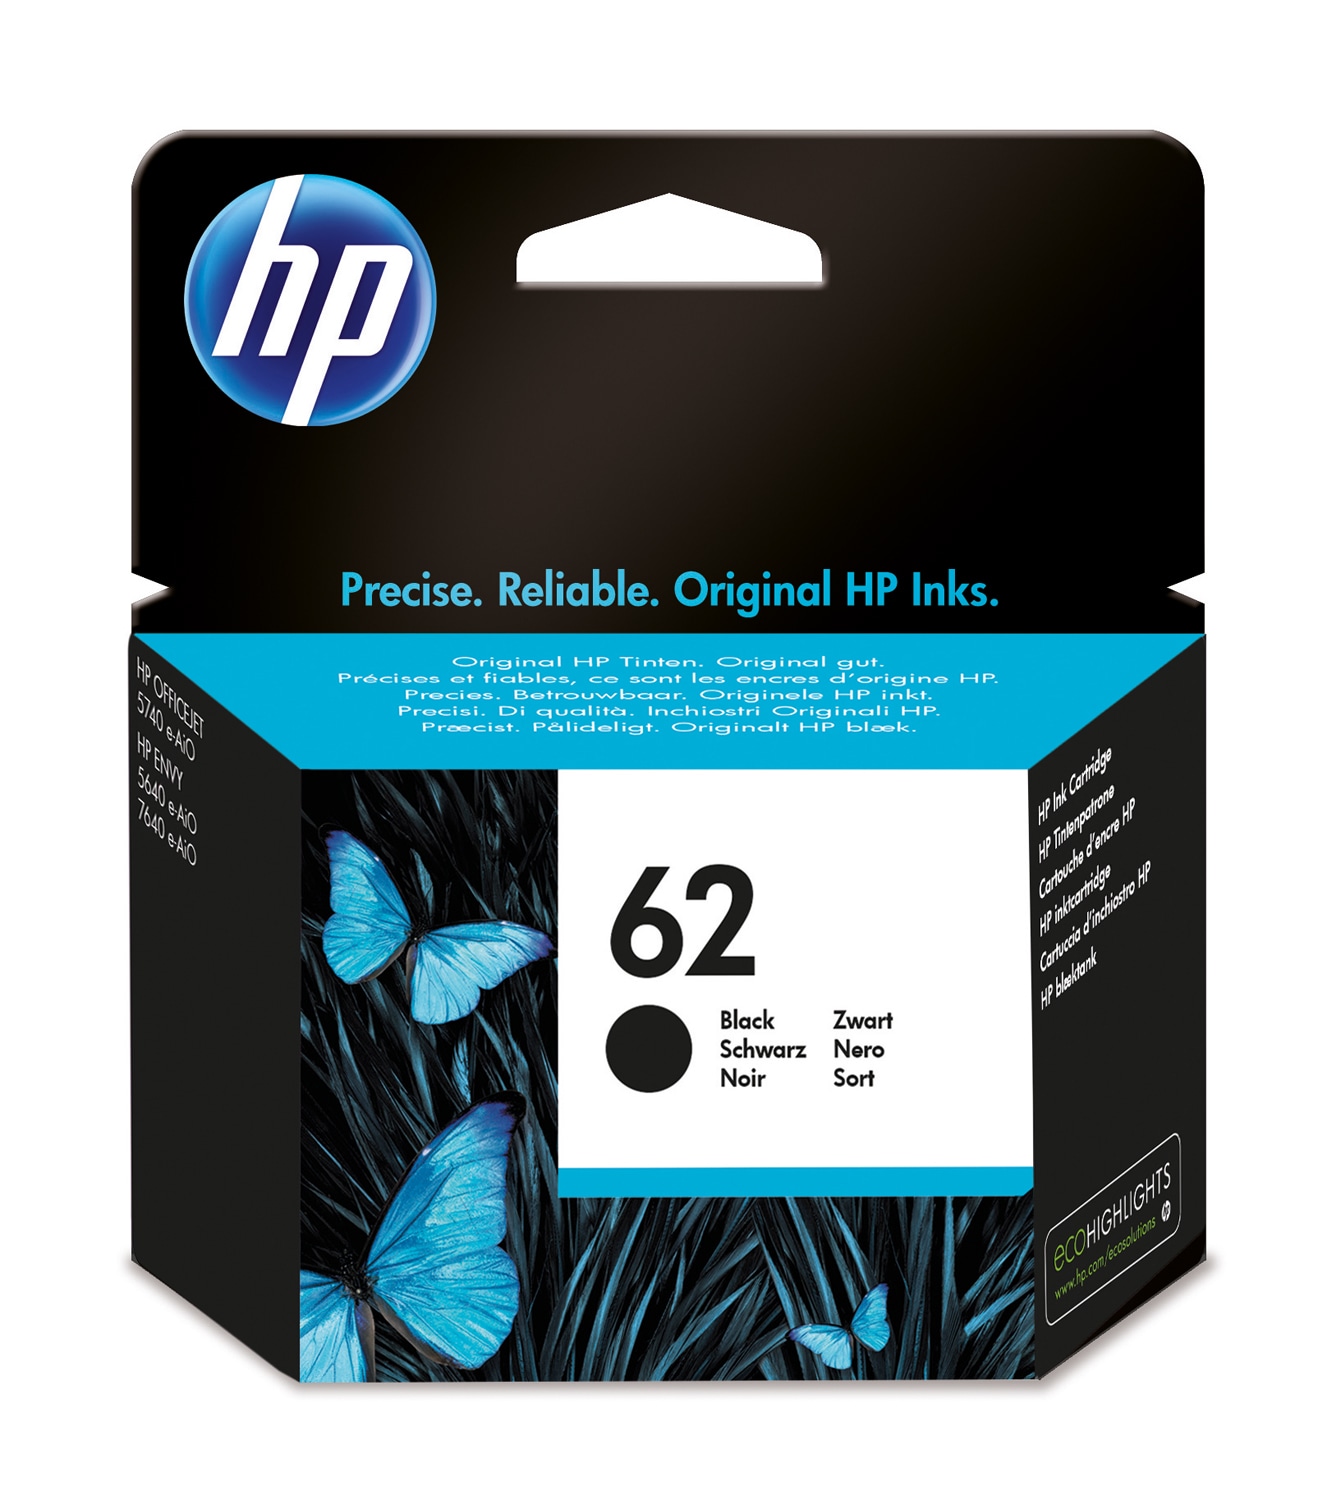 HP Black Original Ink Cartridge | HP®